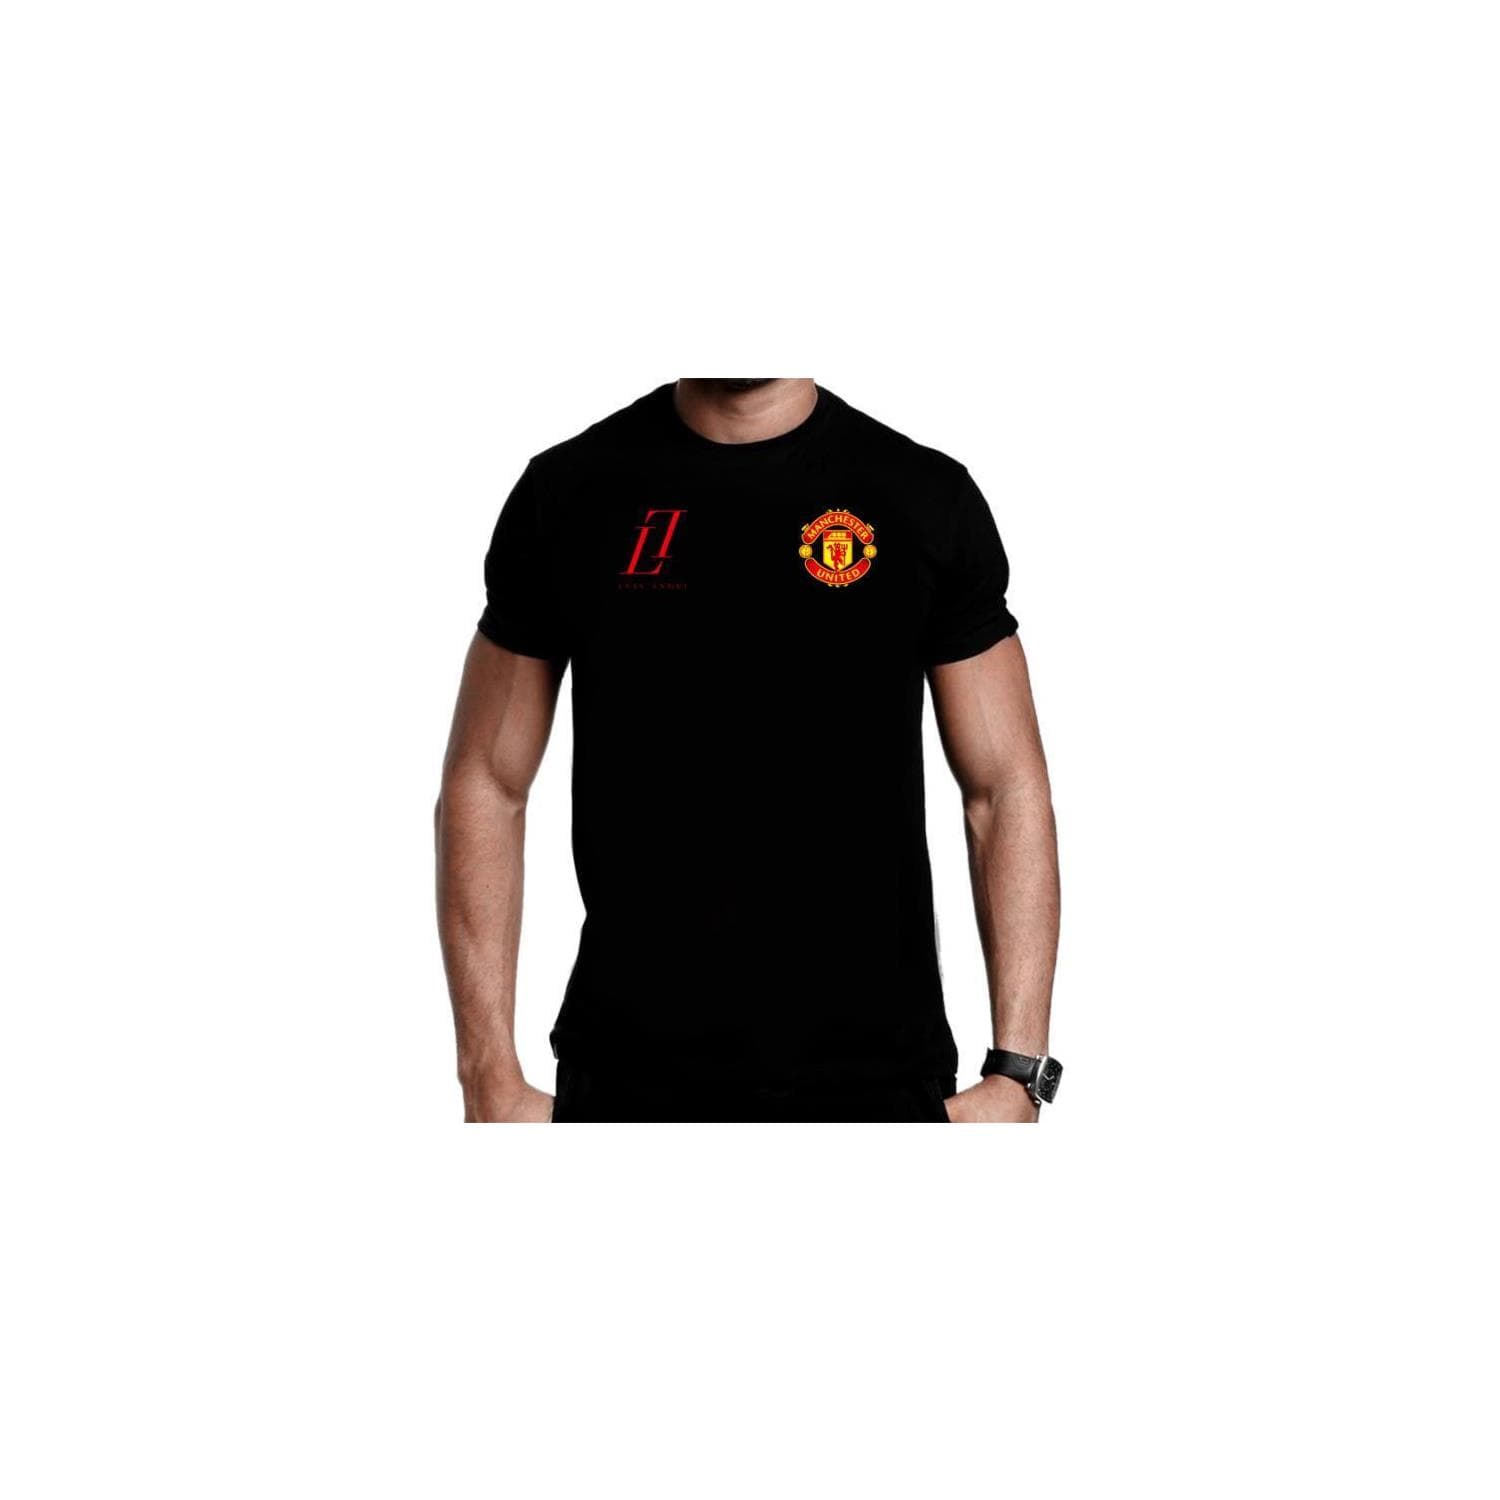 Tshirt Manchester united Couleur